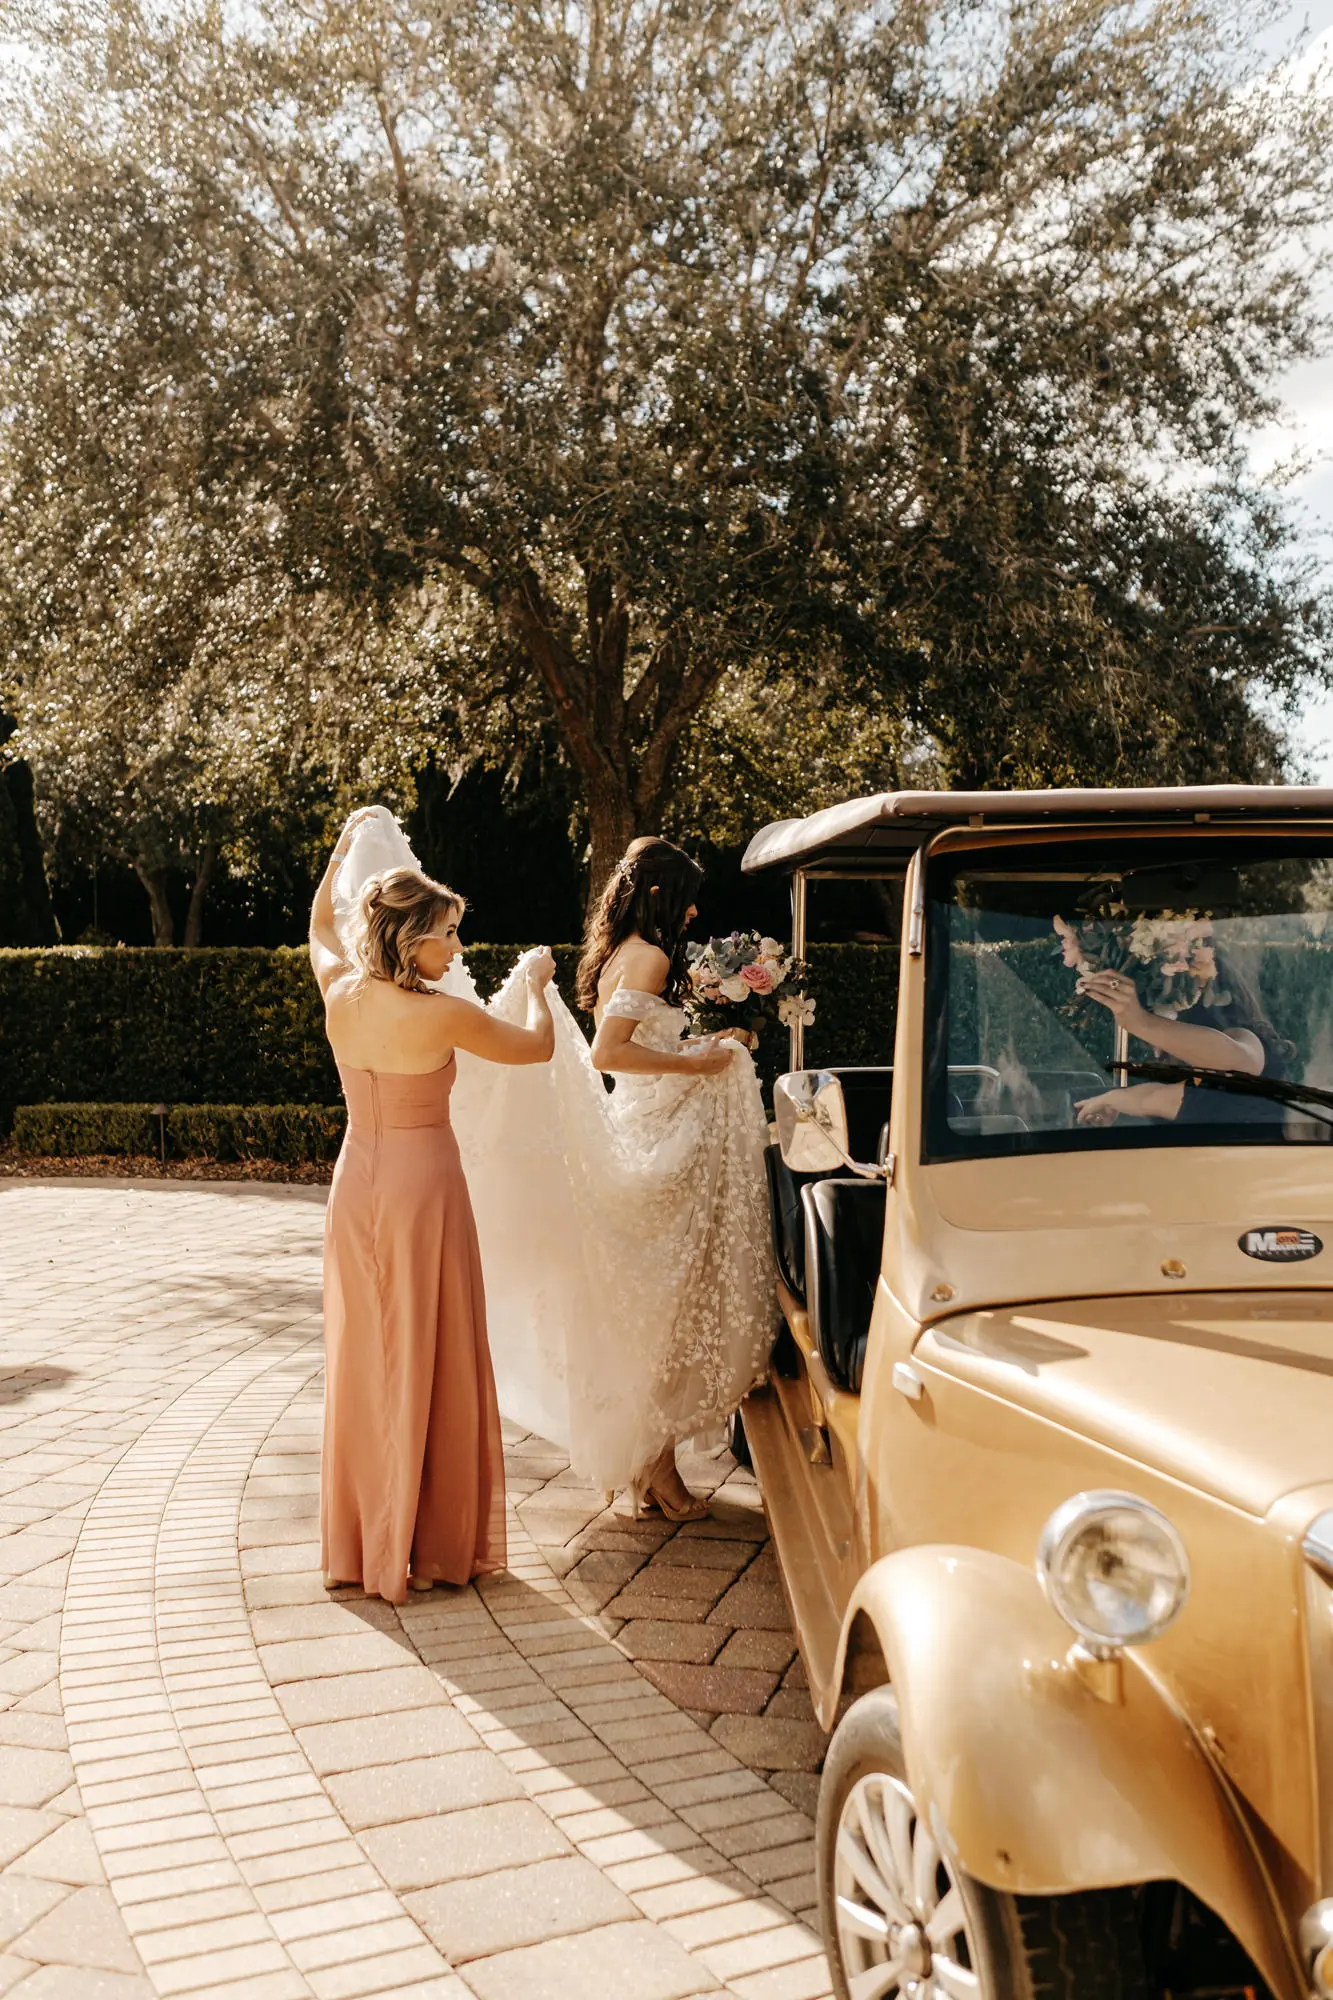 Classic Car Wedding Ceremony Bridal Arrival Ideas | Tampa Bay Planner Coastal Coordinating